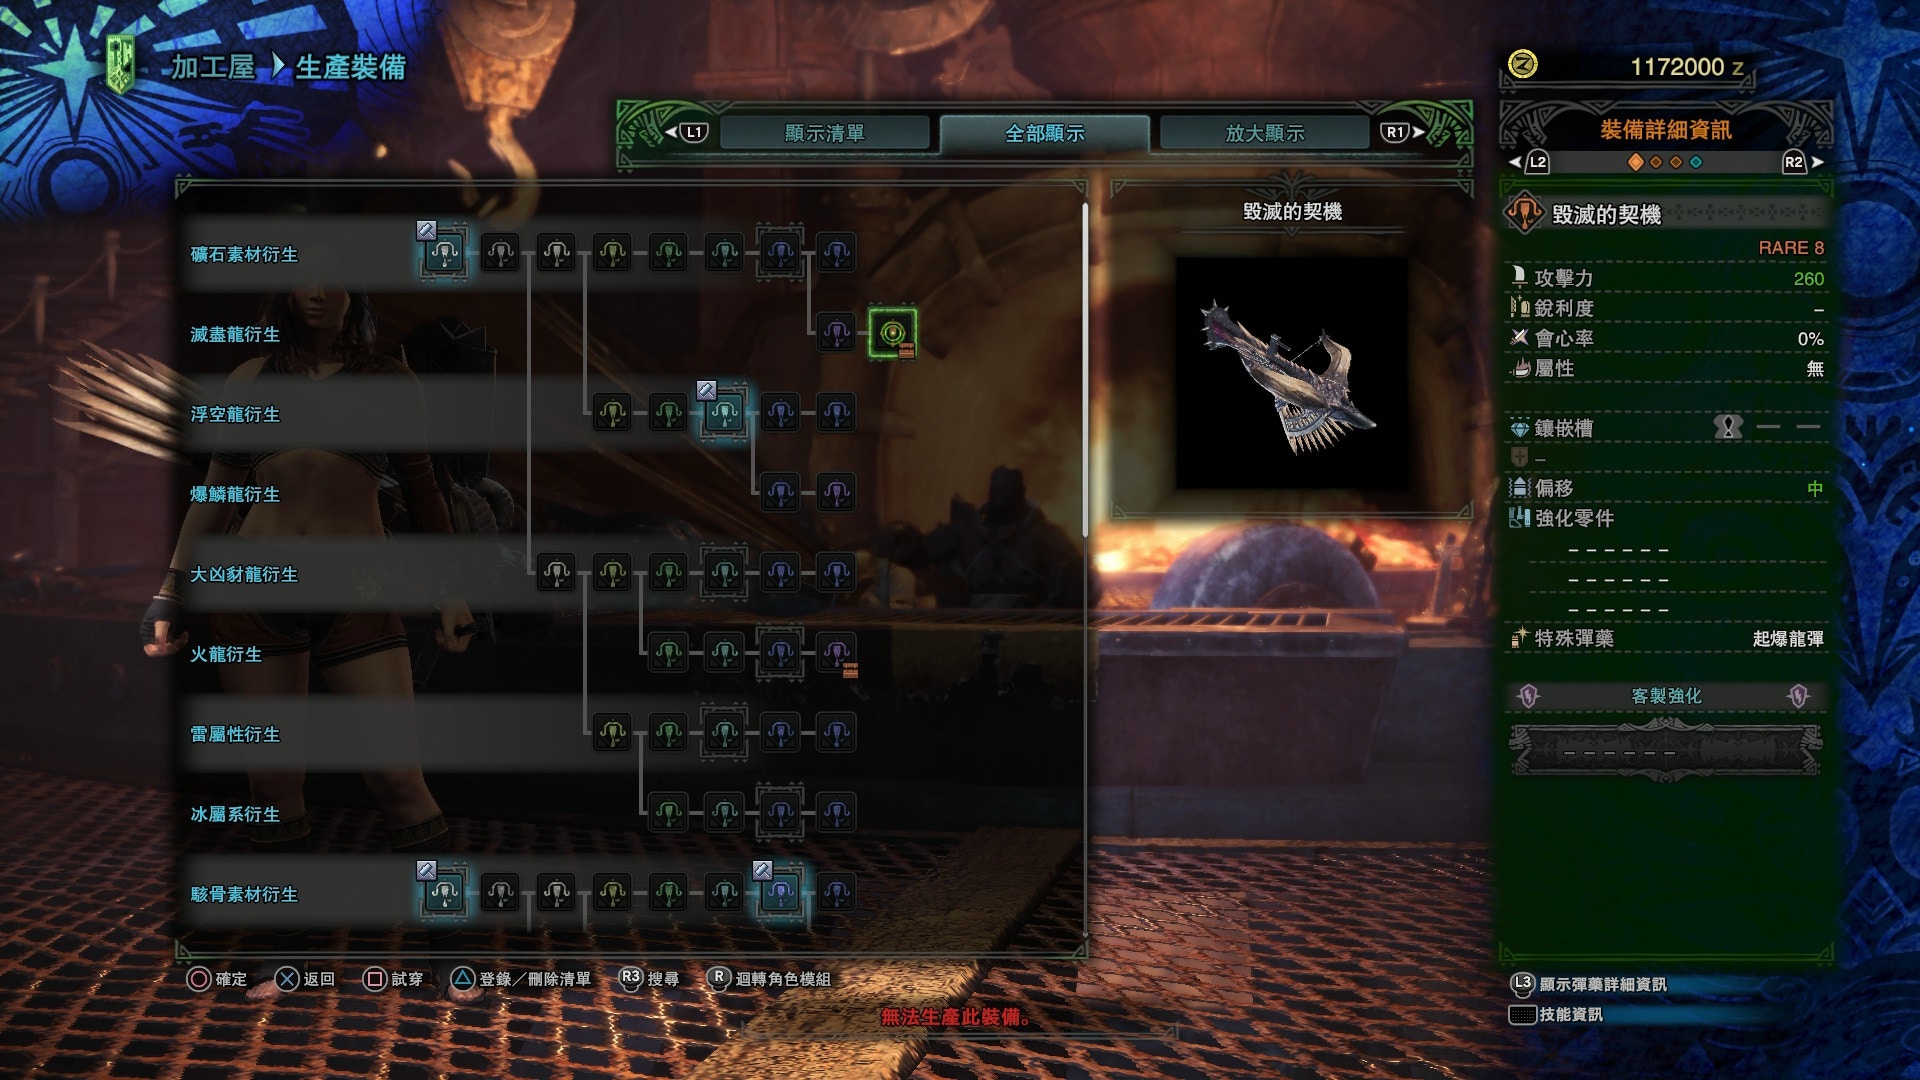 Monster Hunter World Mhw資料攻略 全裝備 戰鬥 技能解說 香港01 遊戲動漫